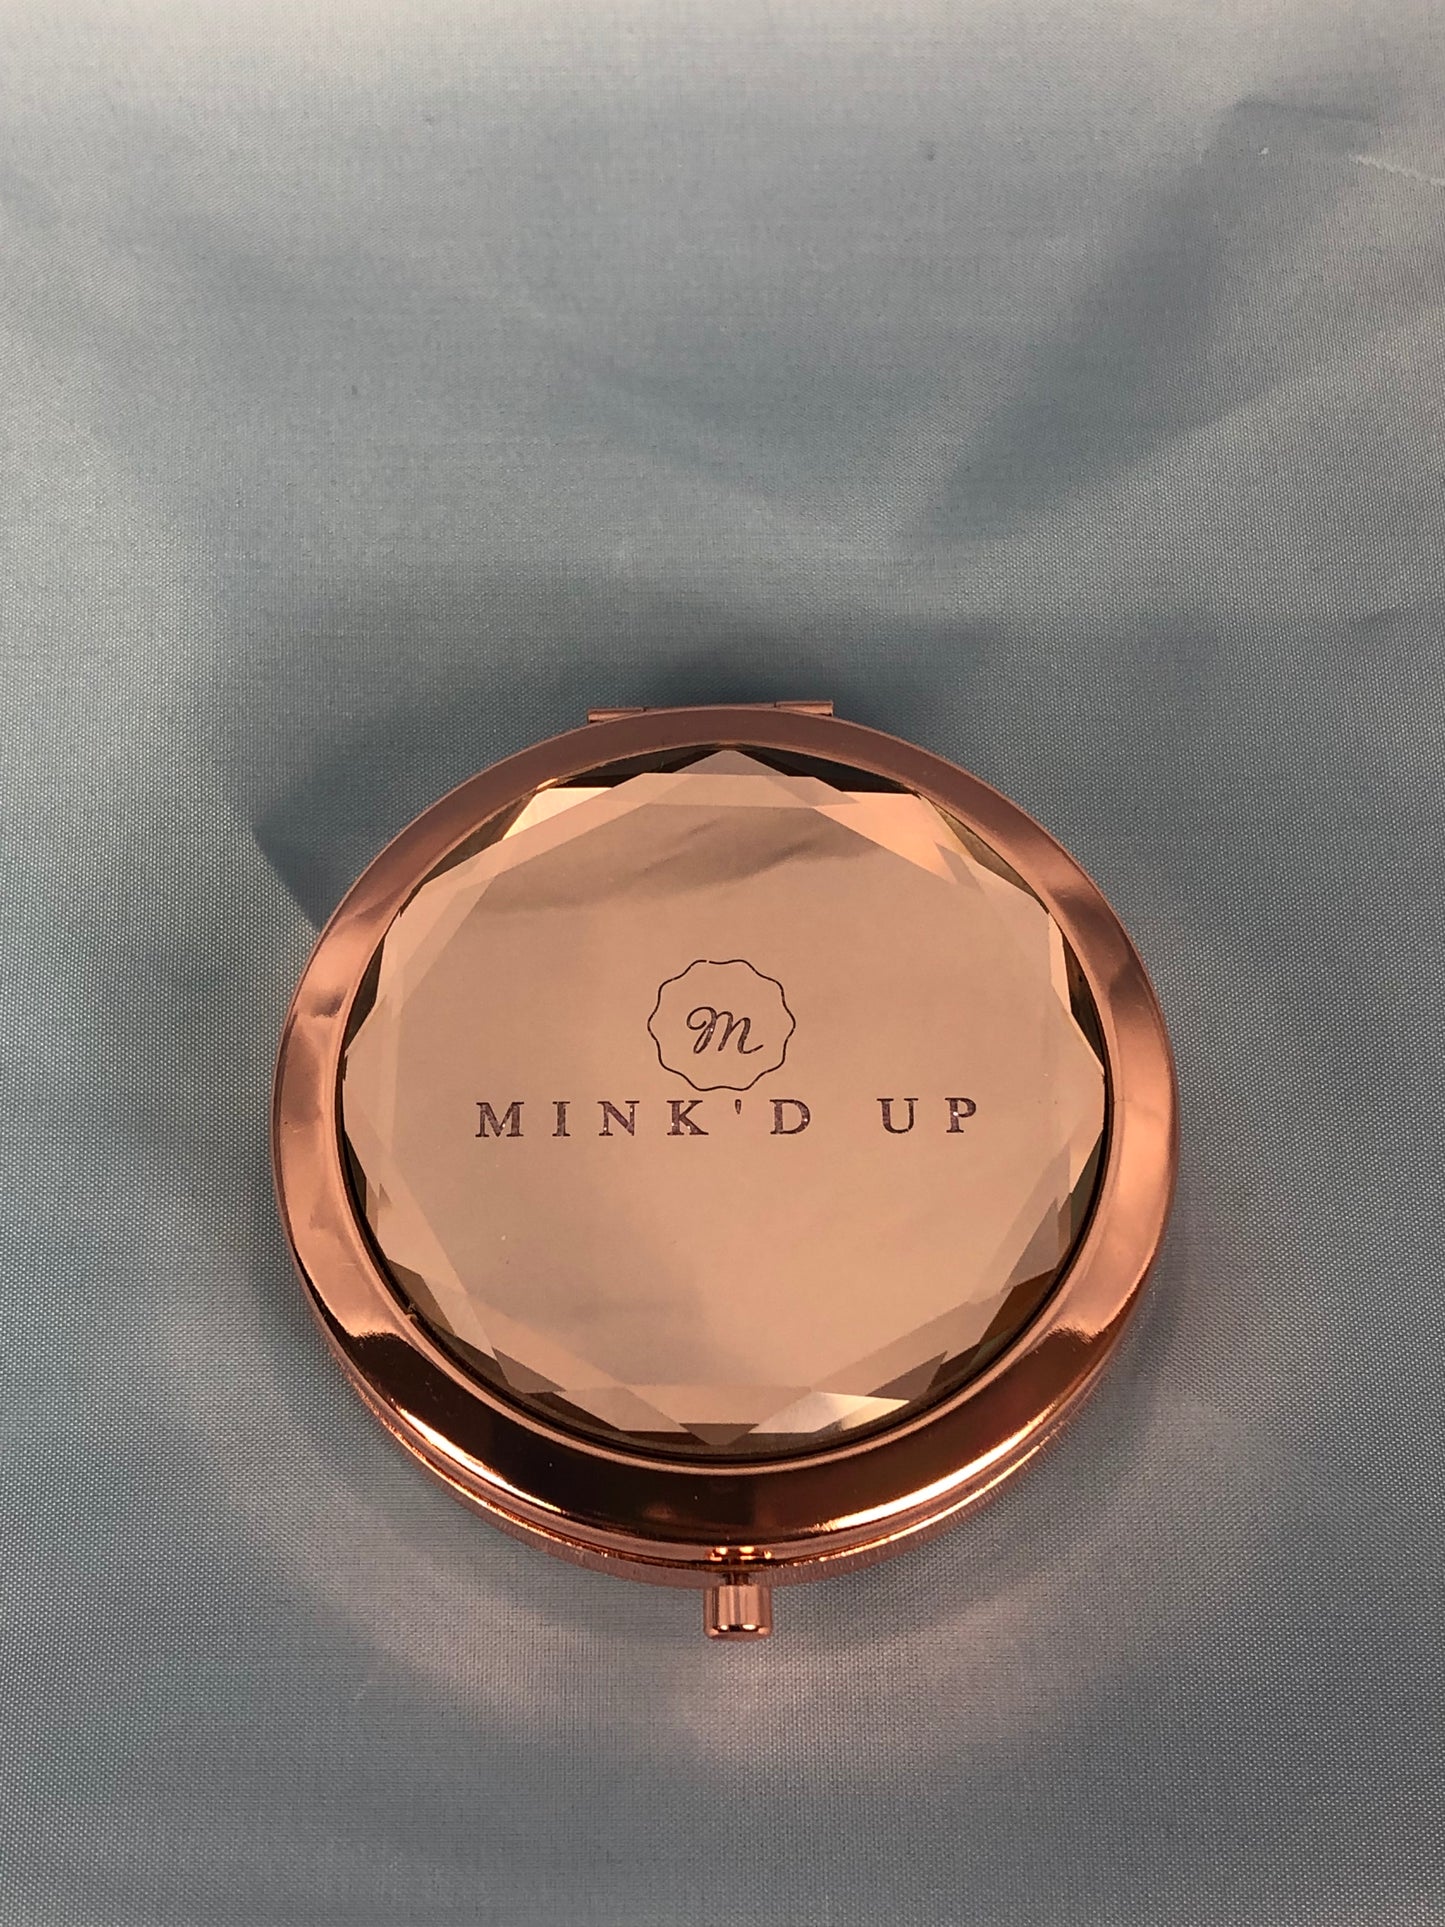 Mink'd Up Glass Eyelash Case&Pocket Mirror